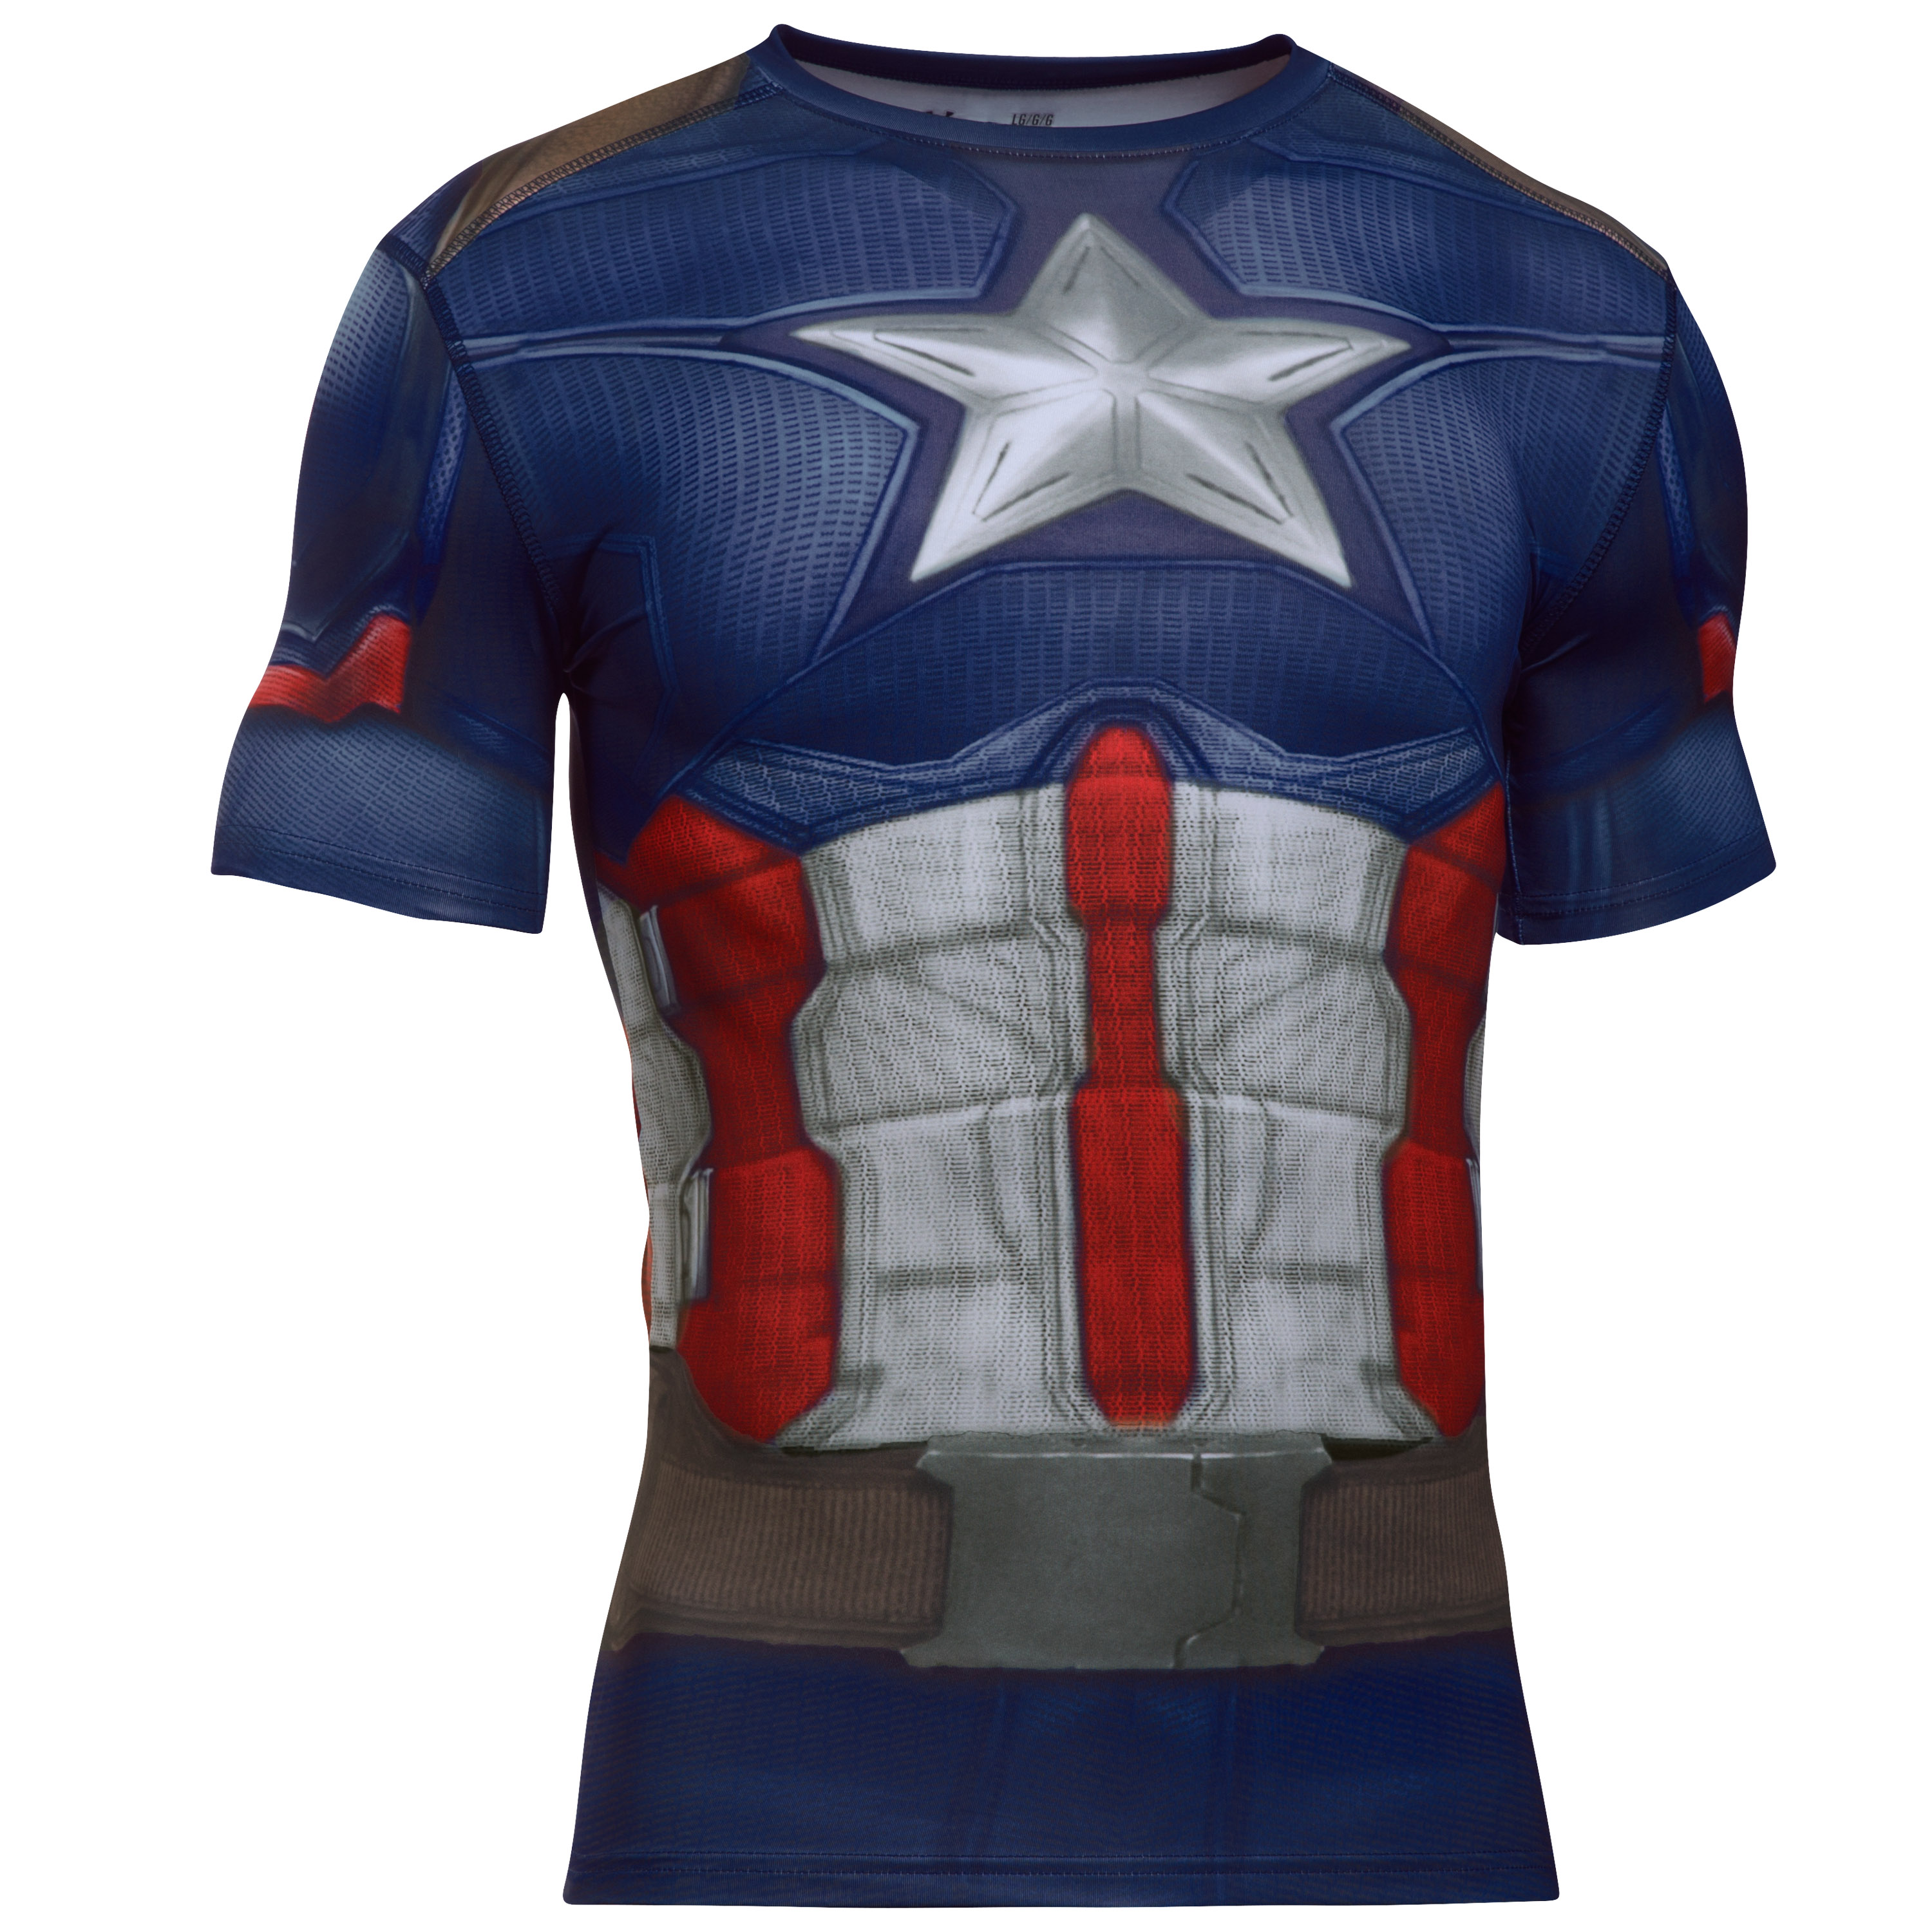 captain america under armour shirt